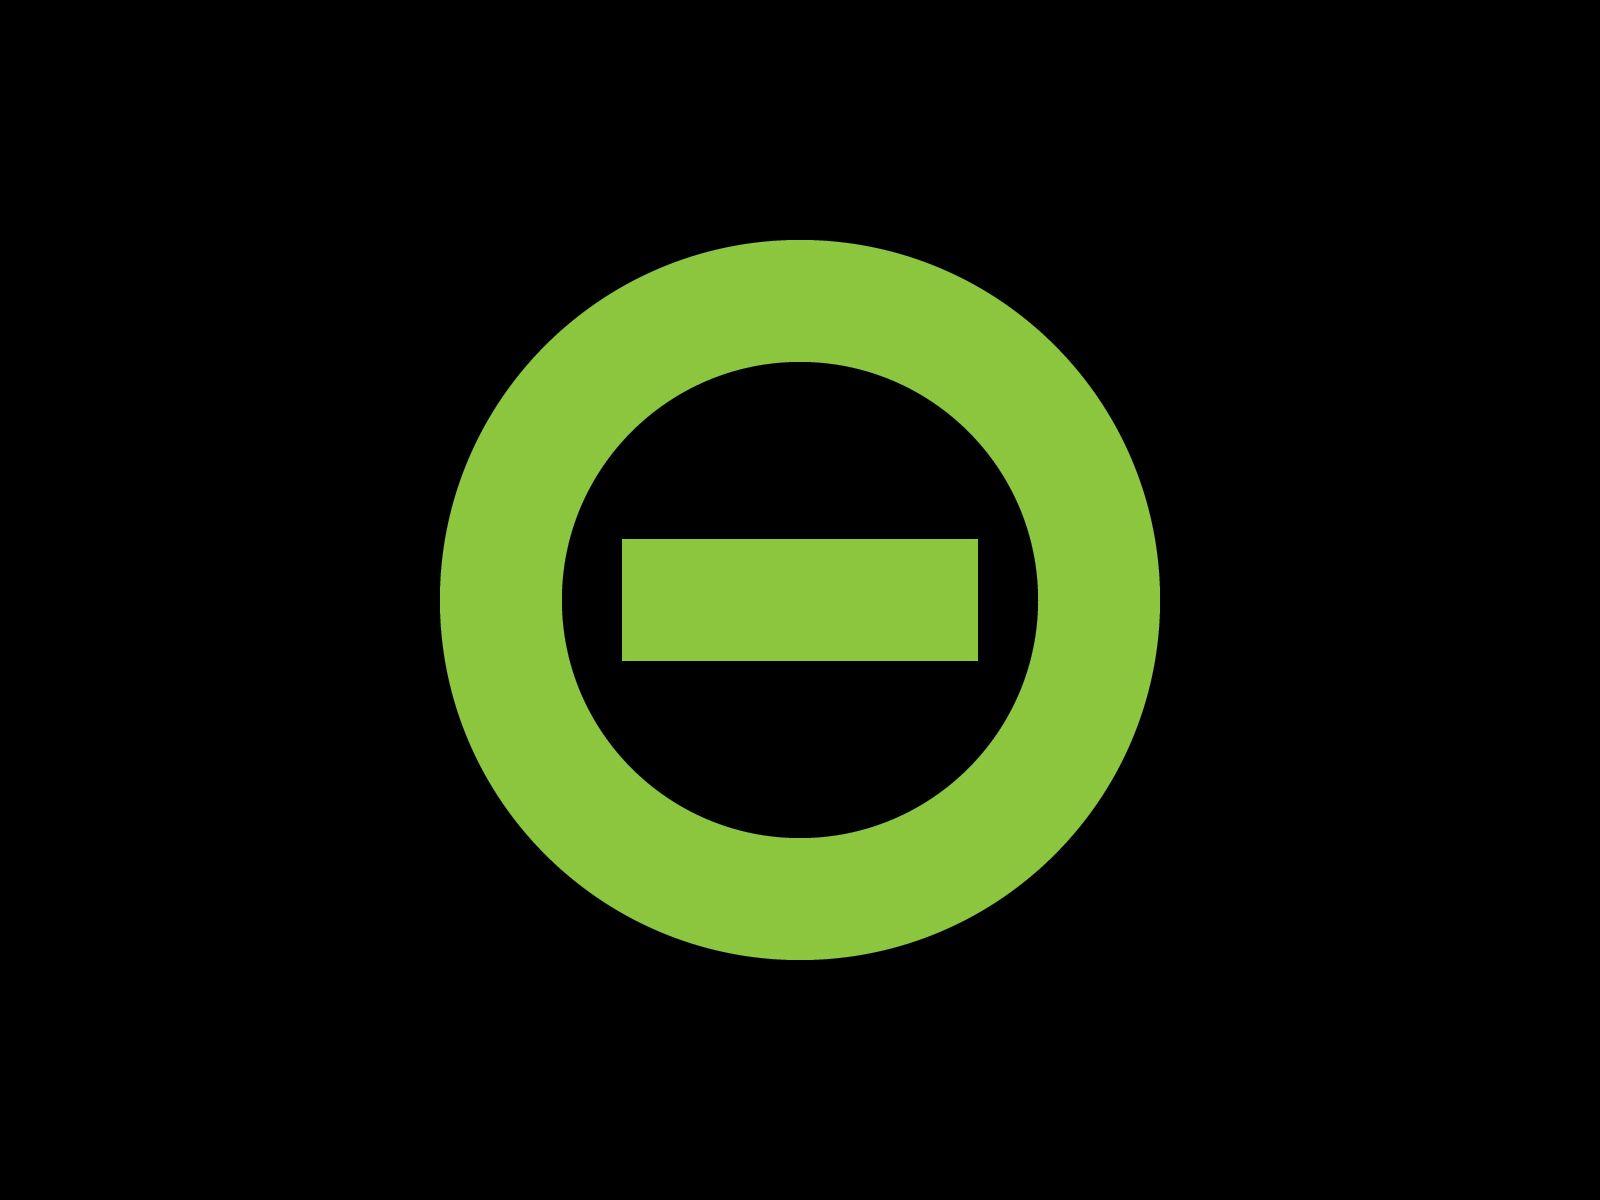 Type O Negative logo and wallpaper. Band logos band logos